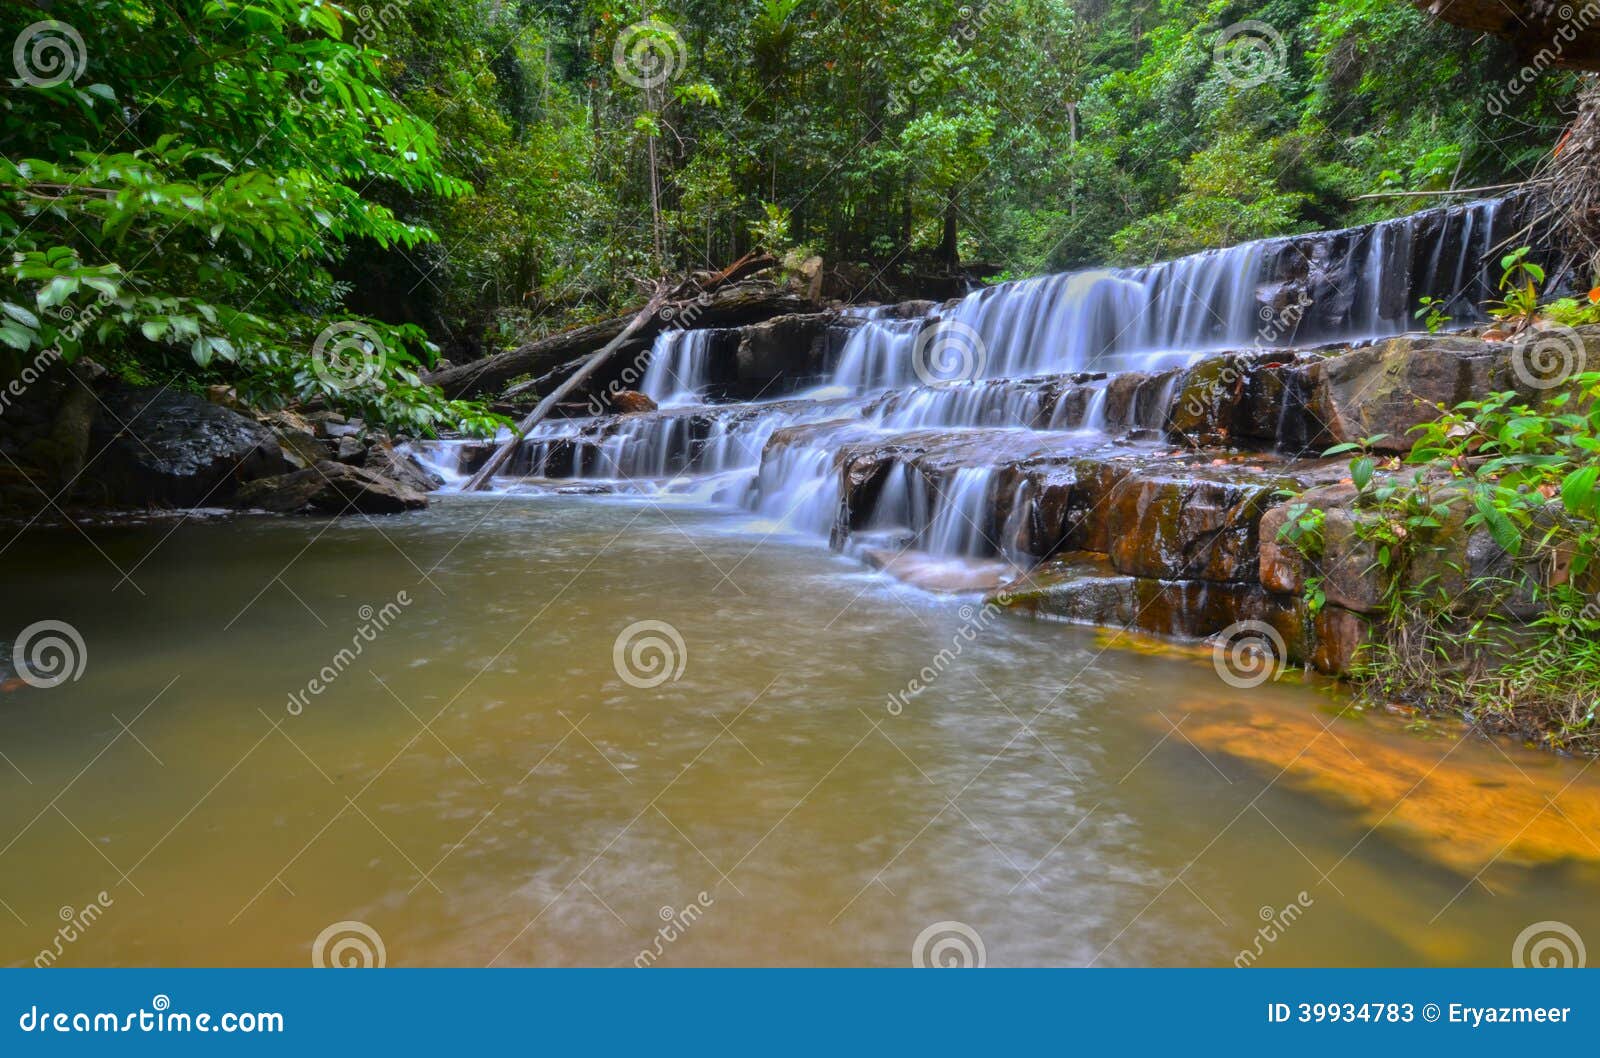 atas pelangi waterfall in pahang, malaysia